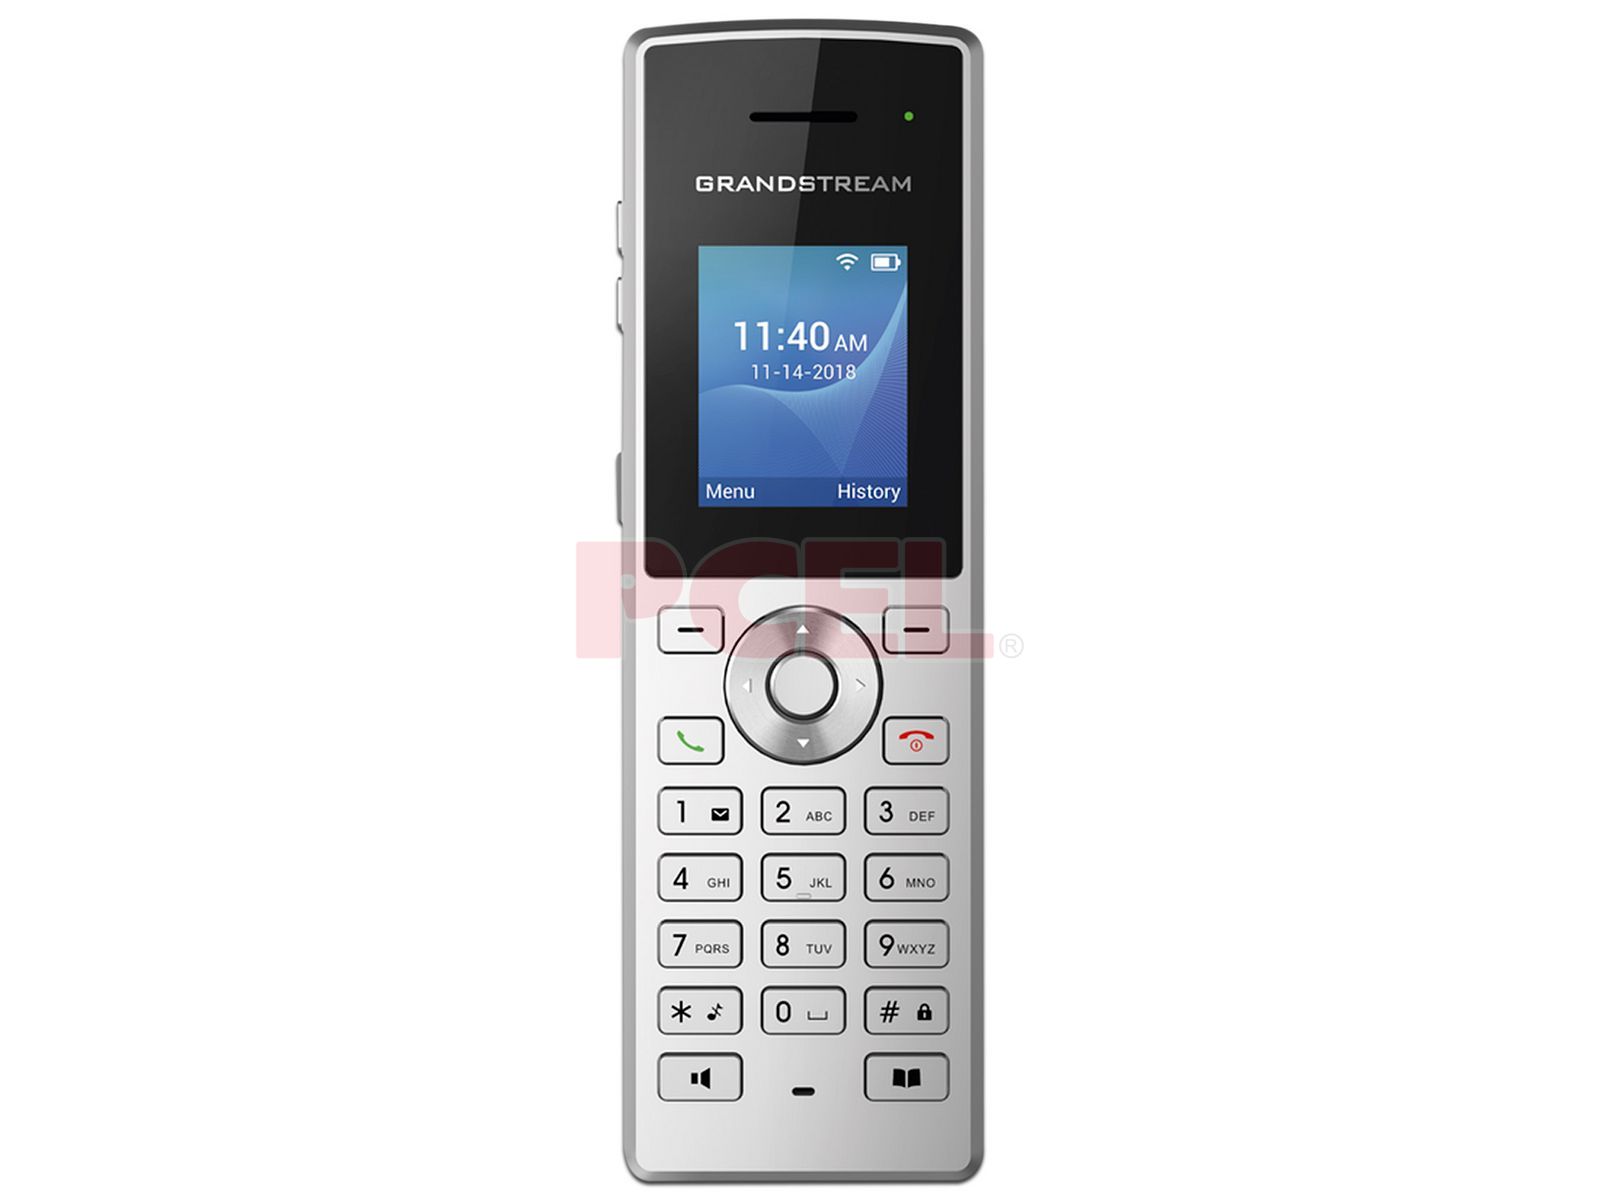 Teléfono Inalámbrico Panasonic KX-TG4112MEB Negro 2 Auriculares